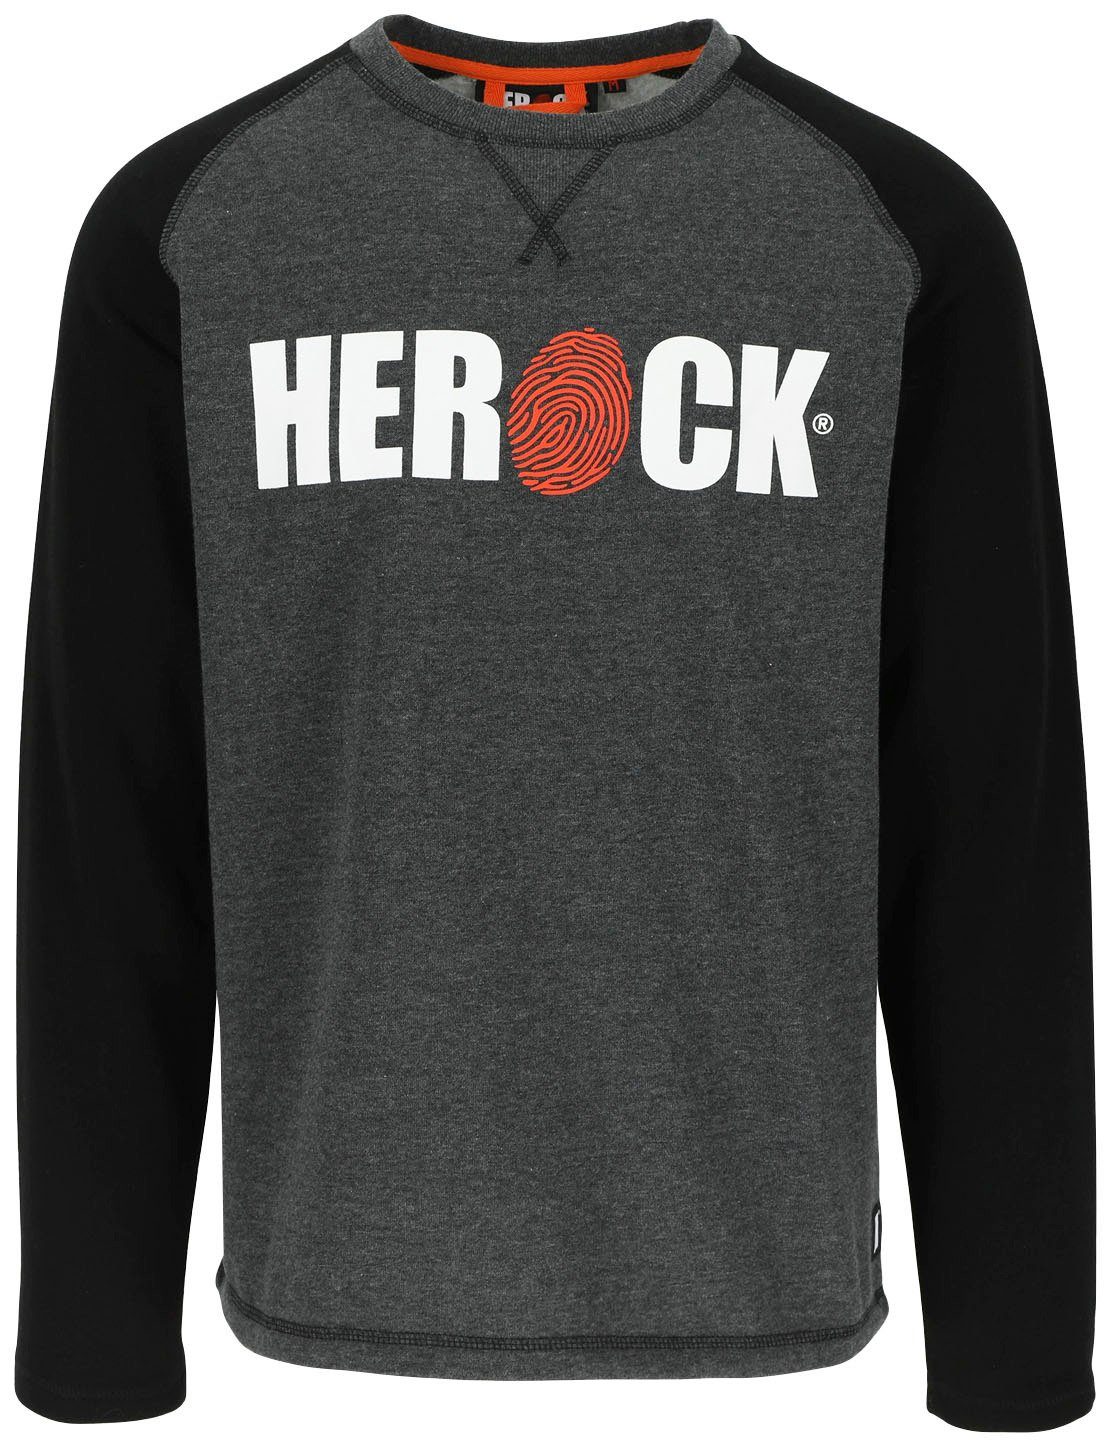 Herock Langarmshirt ROLES Sweater T-Shirt/Sweater, Rundhals, mit Herock®- Aufdruck, 2-Farbig Schwarz/Grau